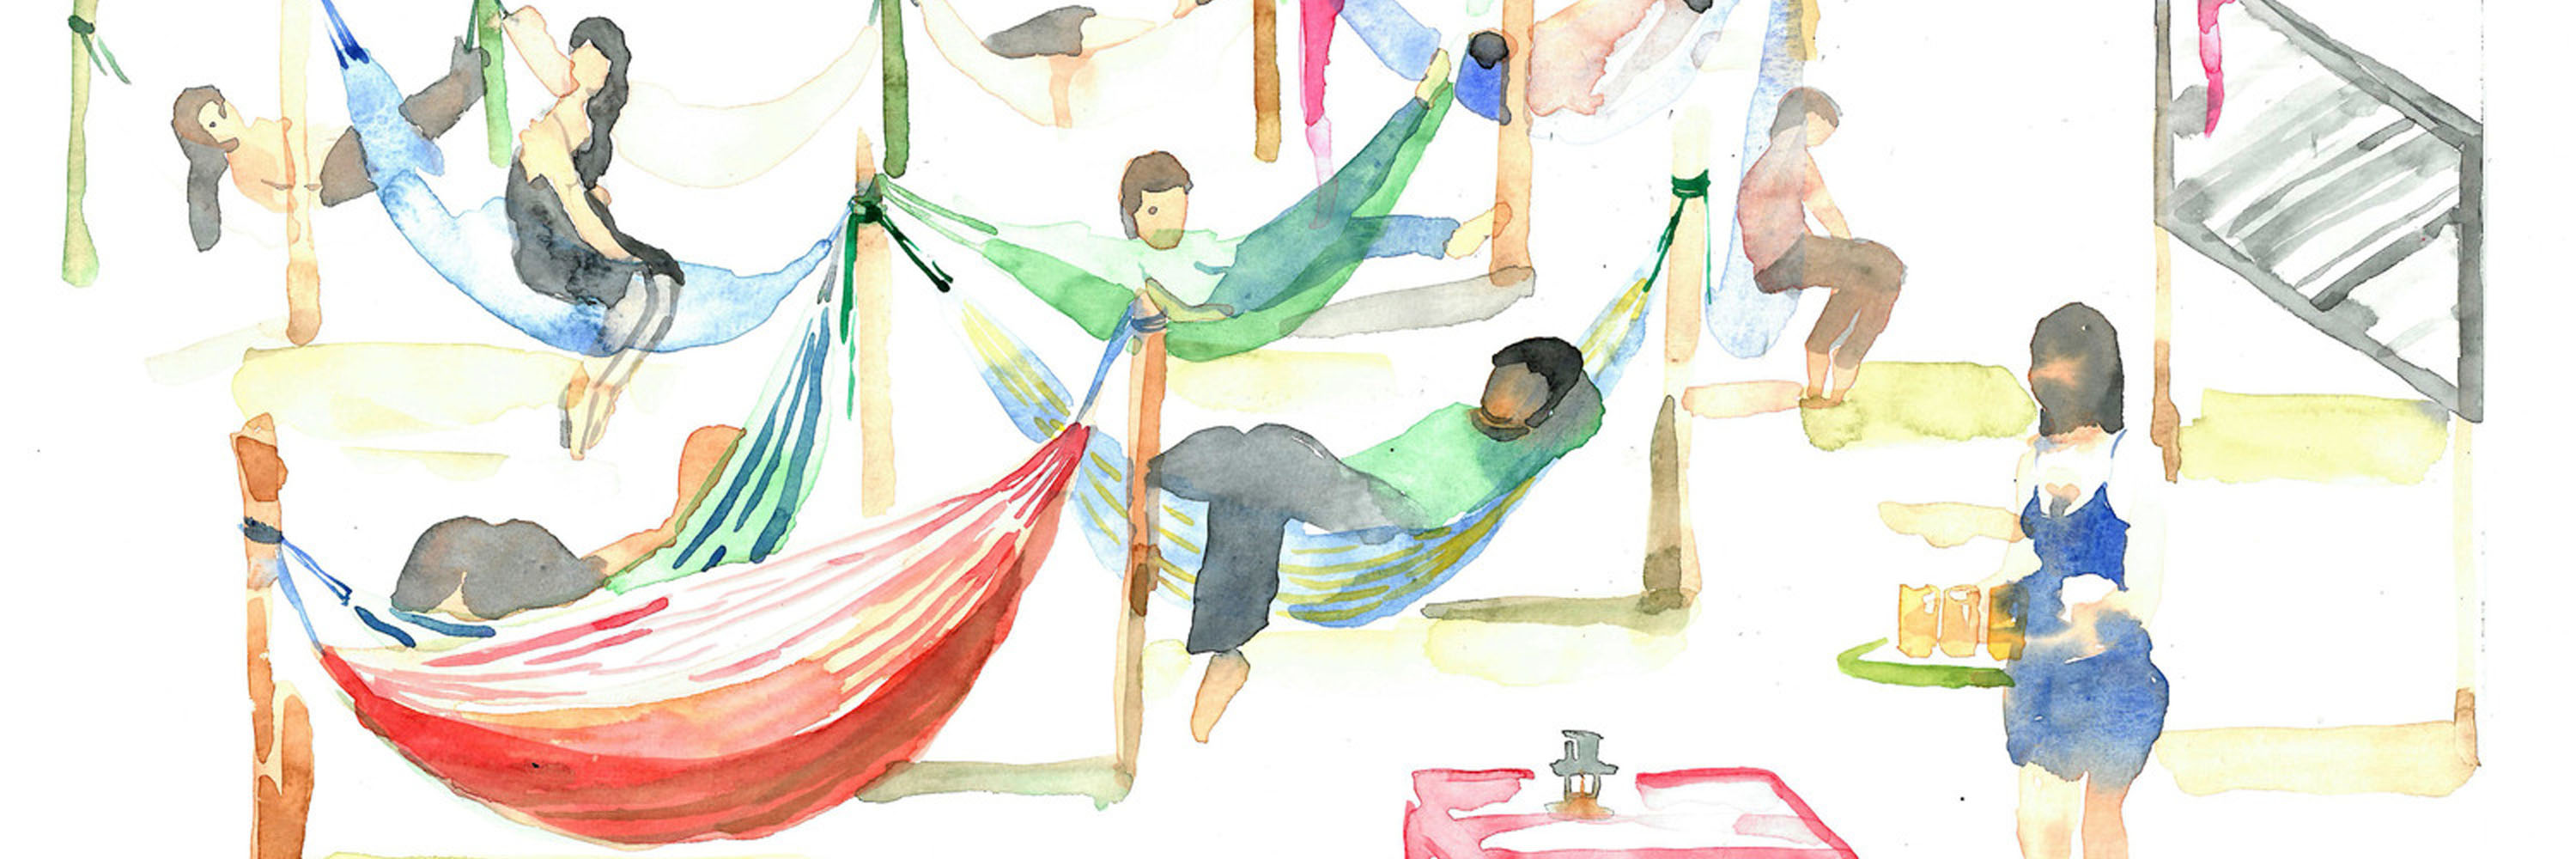 Watercolor painting: people lounging in hammocks being served coffee